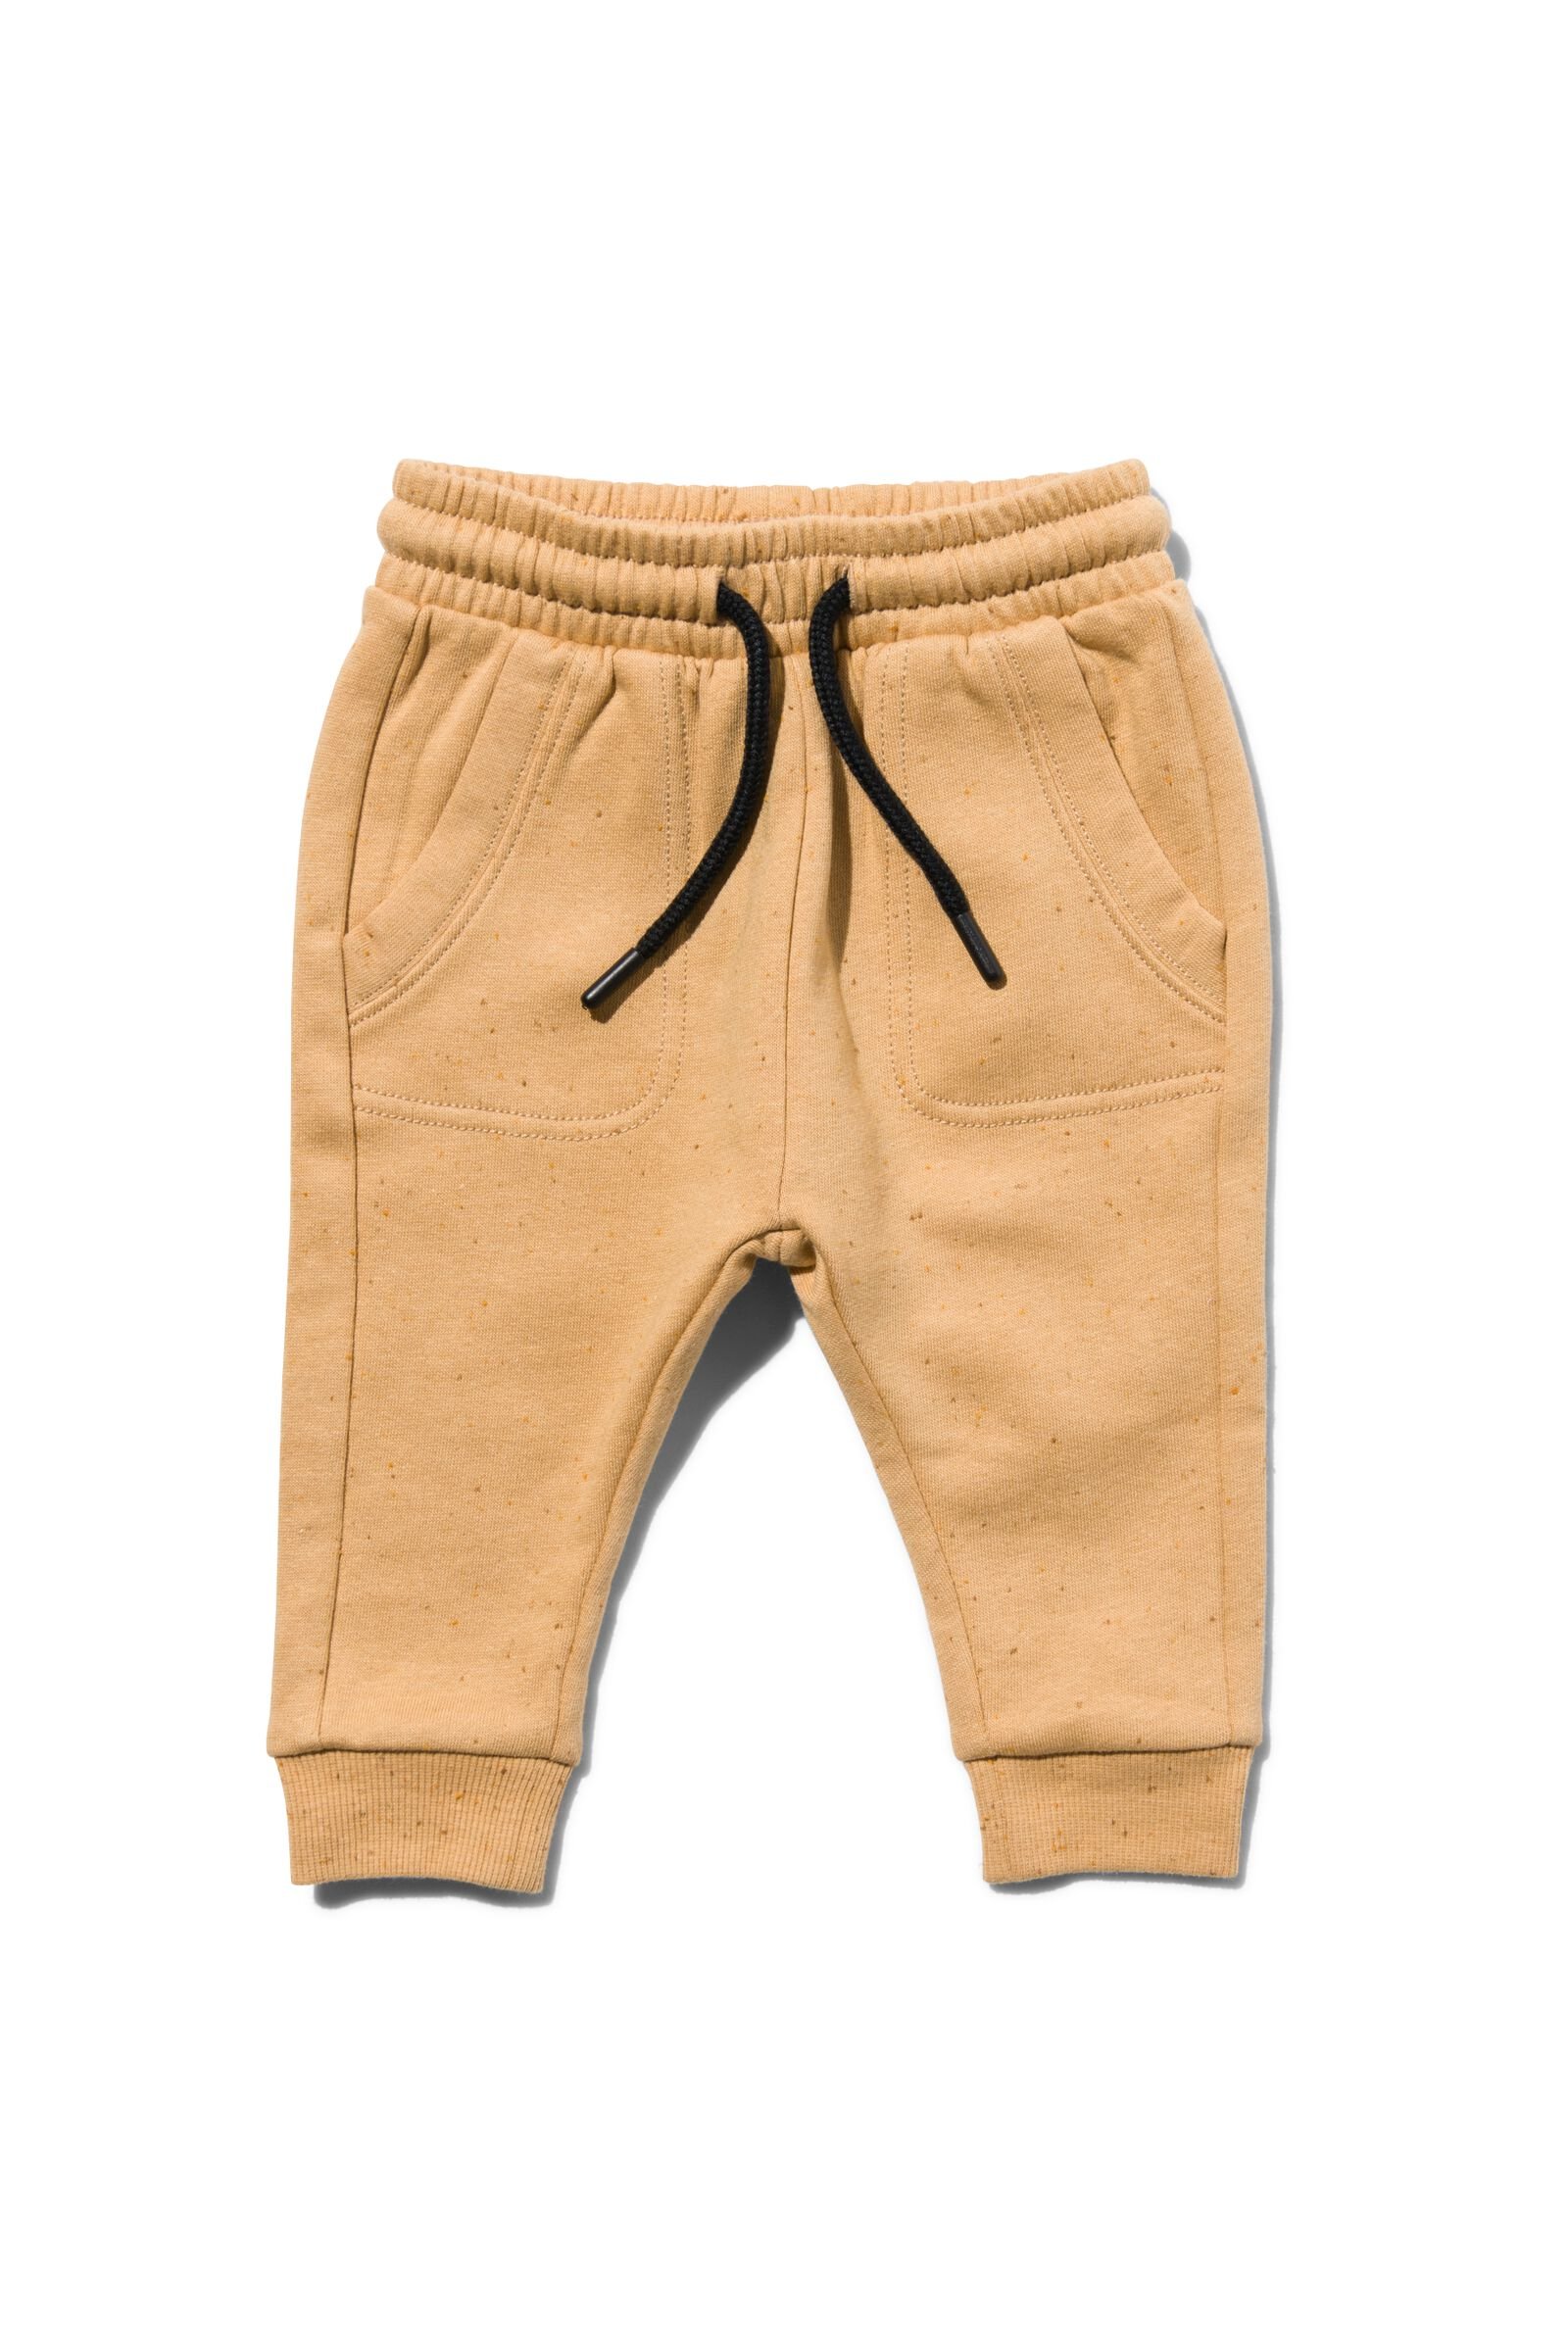 pantalon sweat bébé nappy sable 68 - 33166542 - HEMA